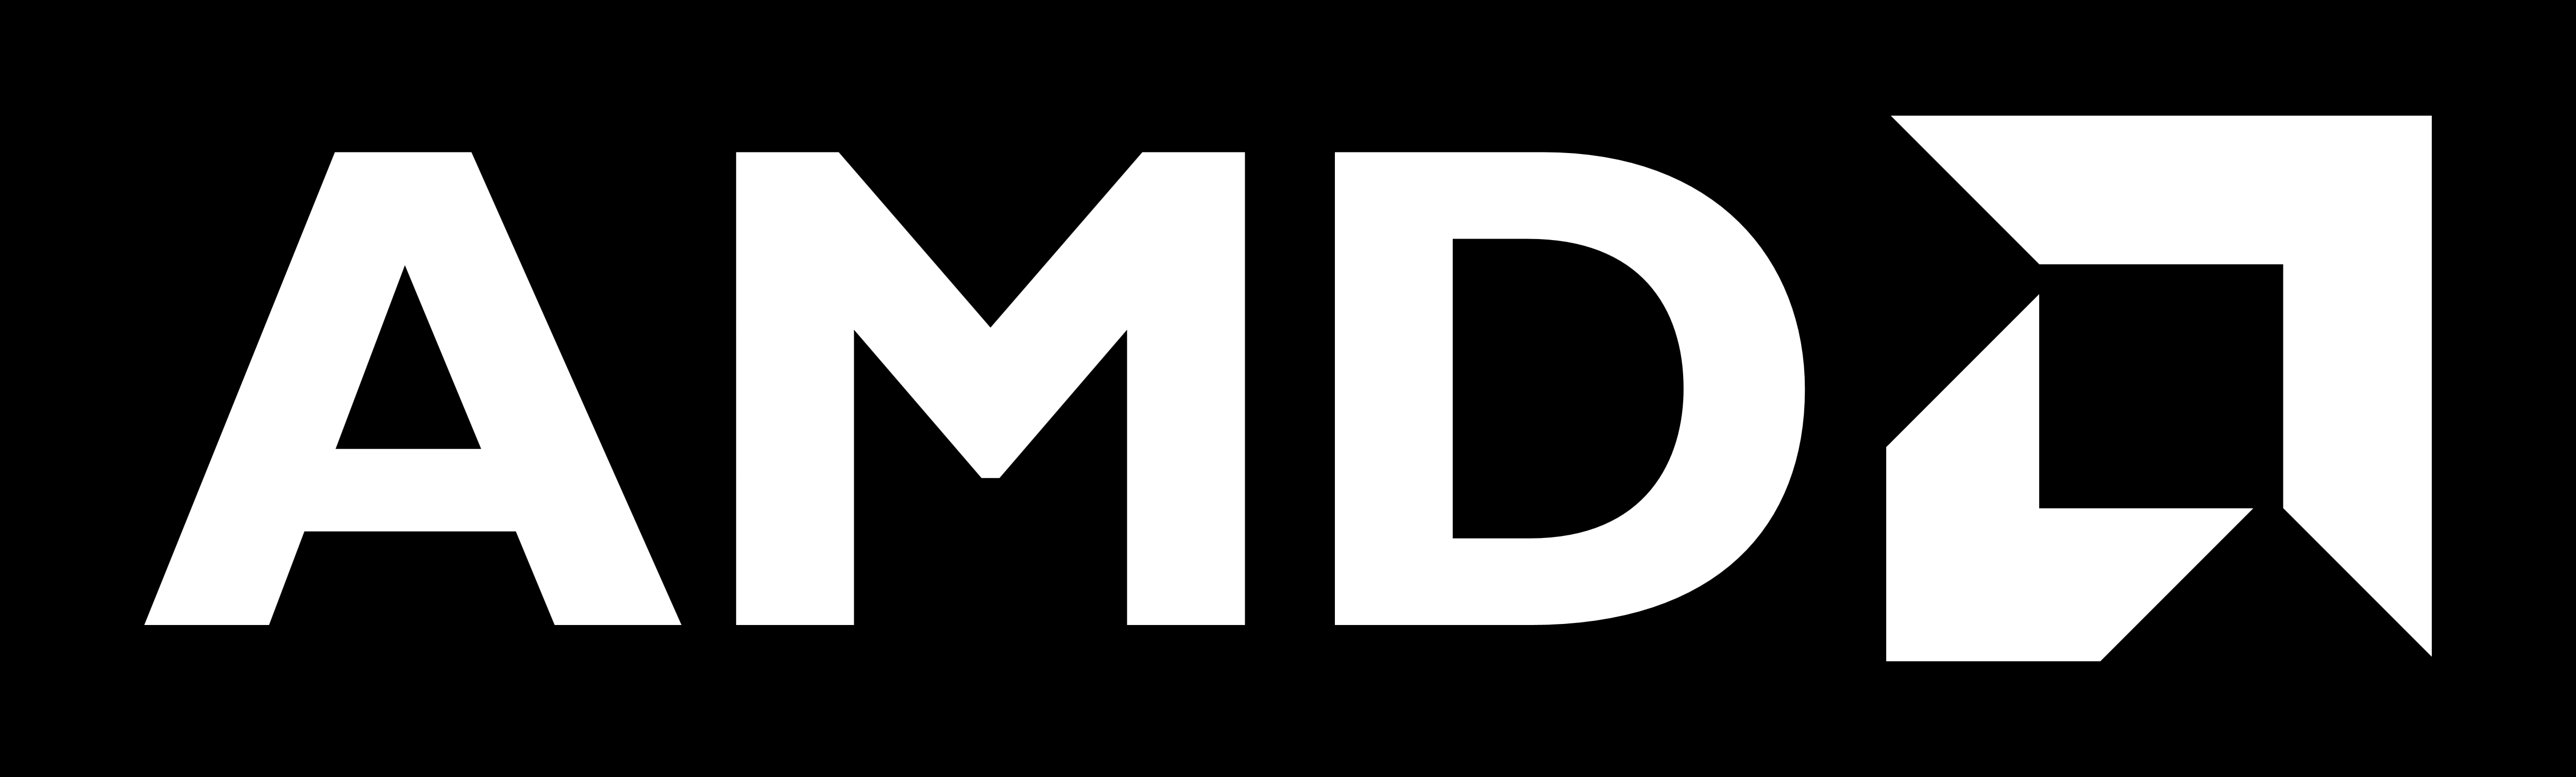 AMD Banner Logo